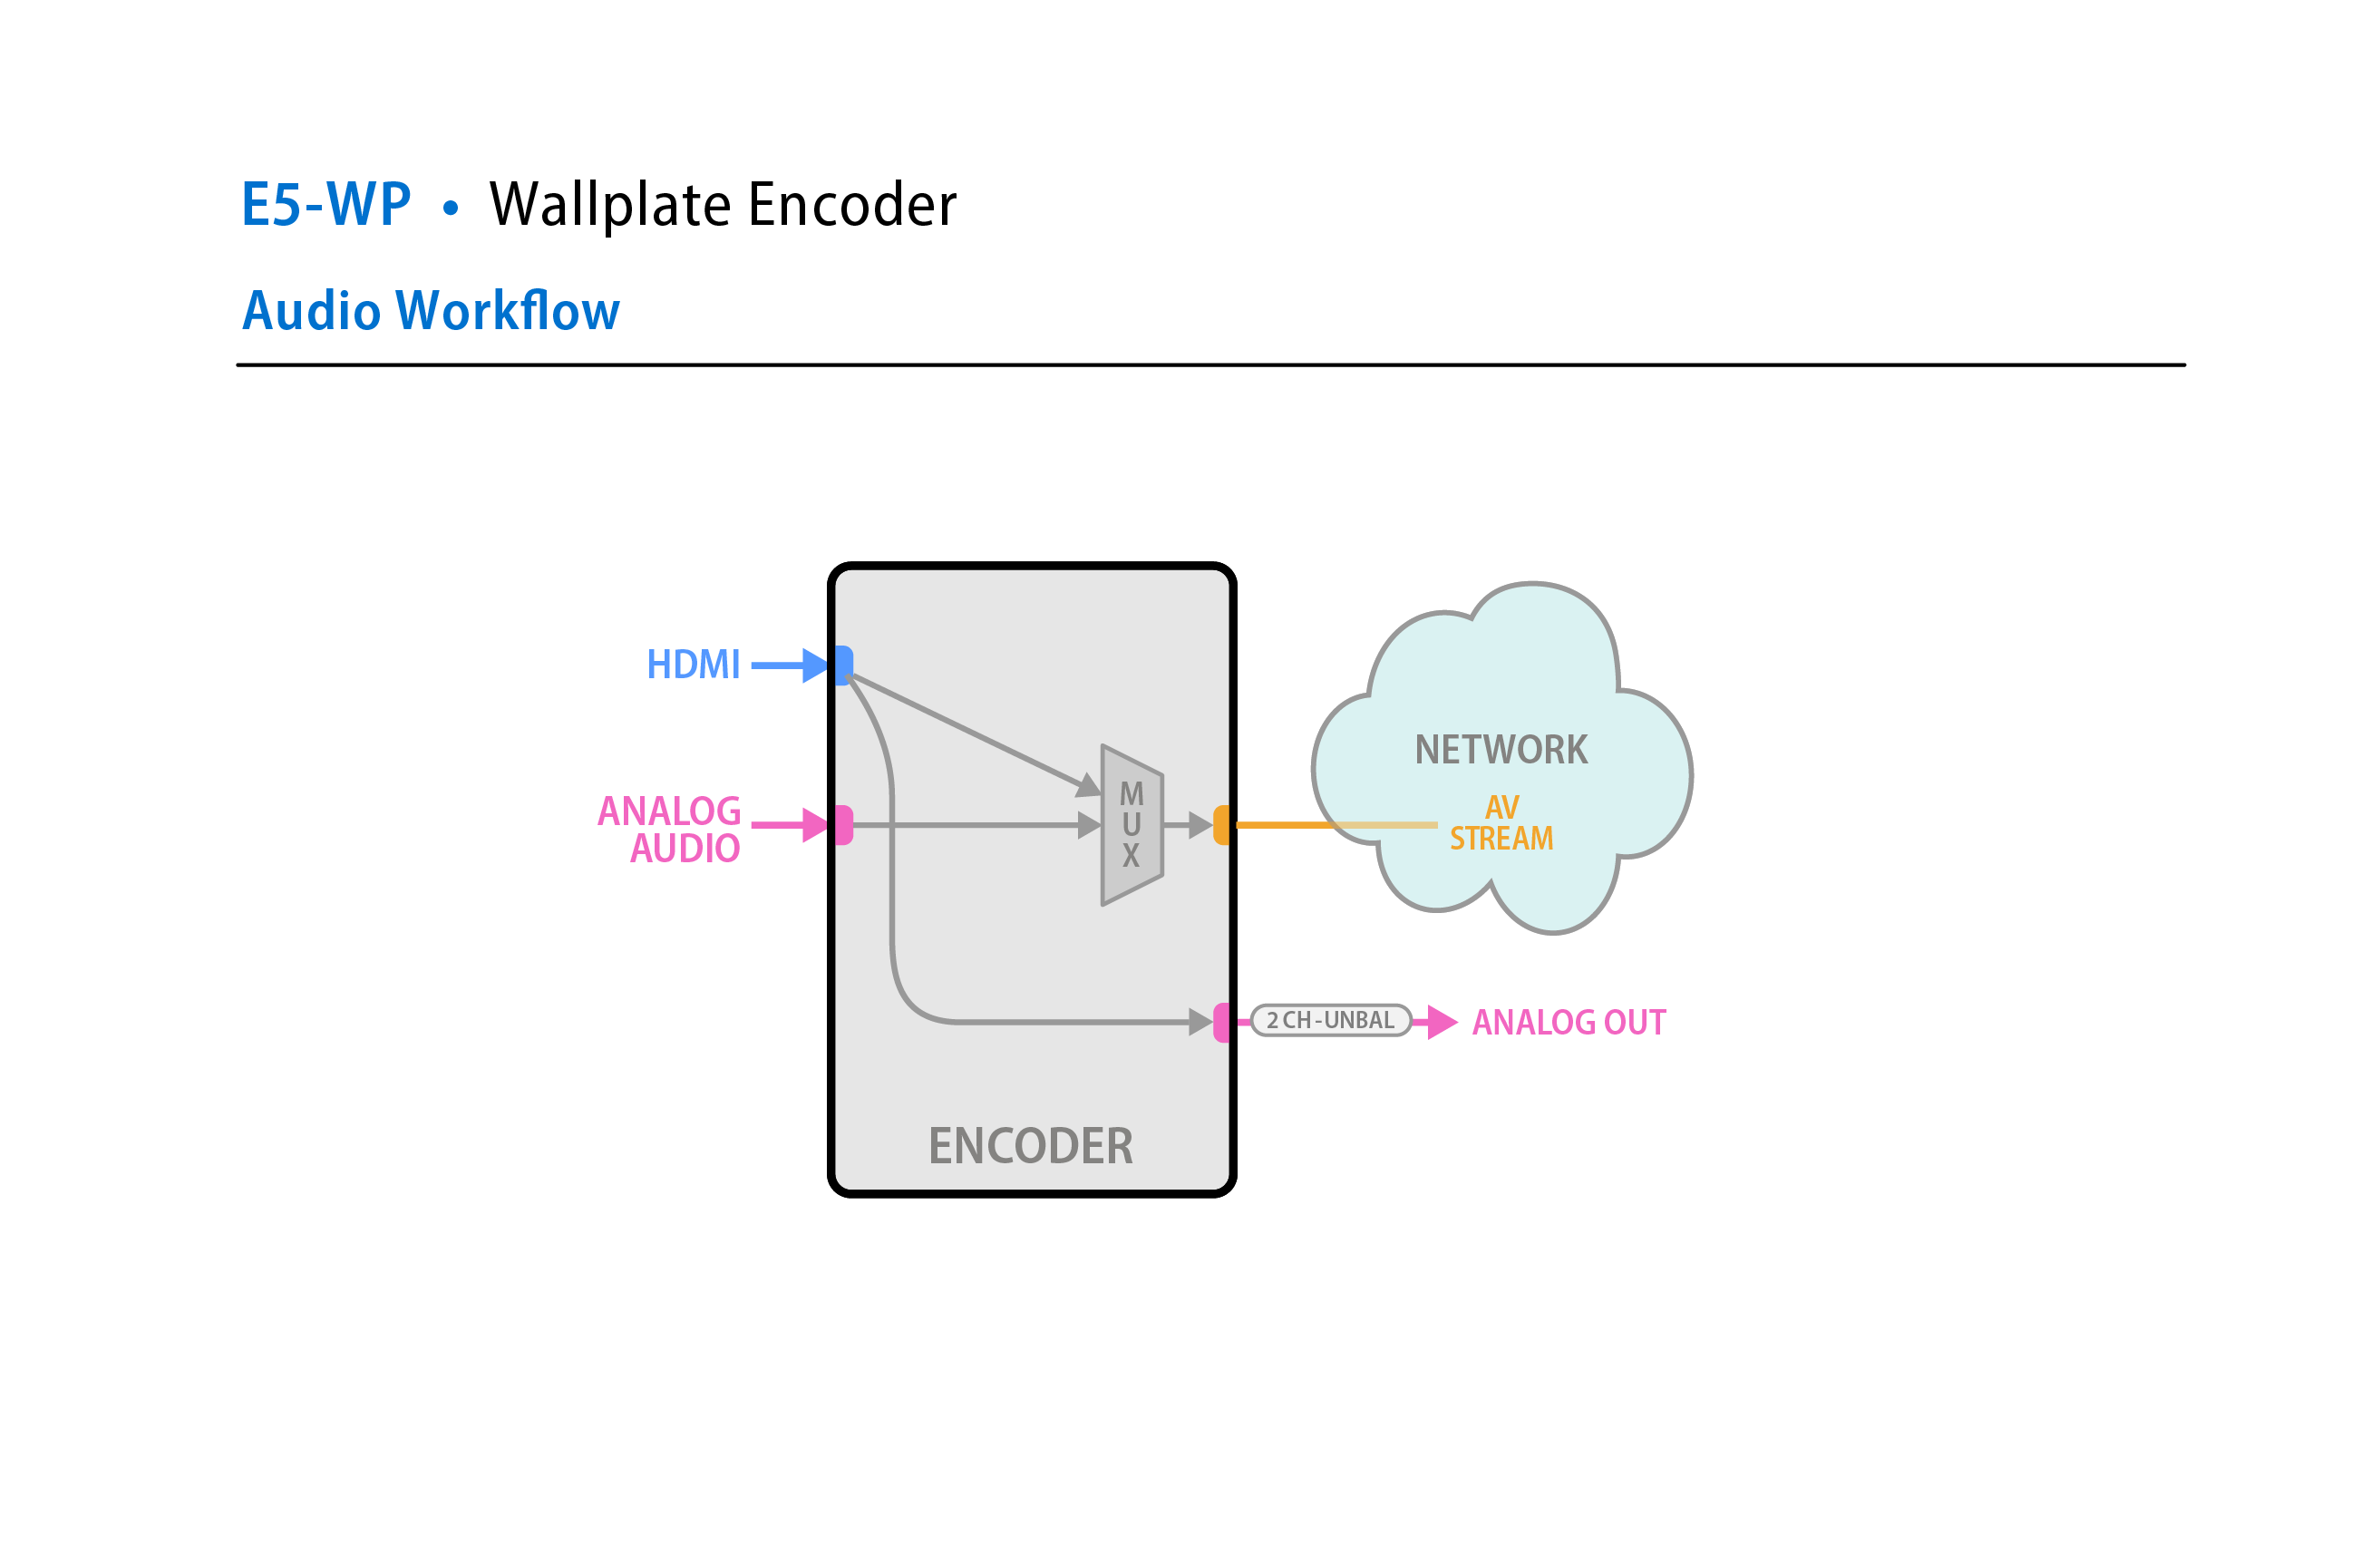 E5-WP Workflow